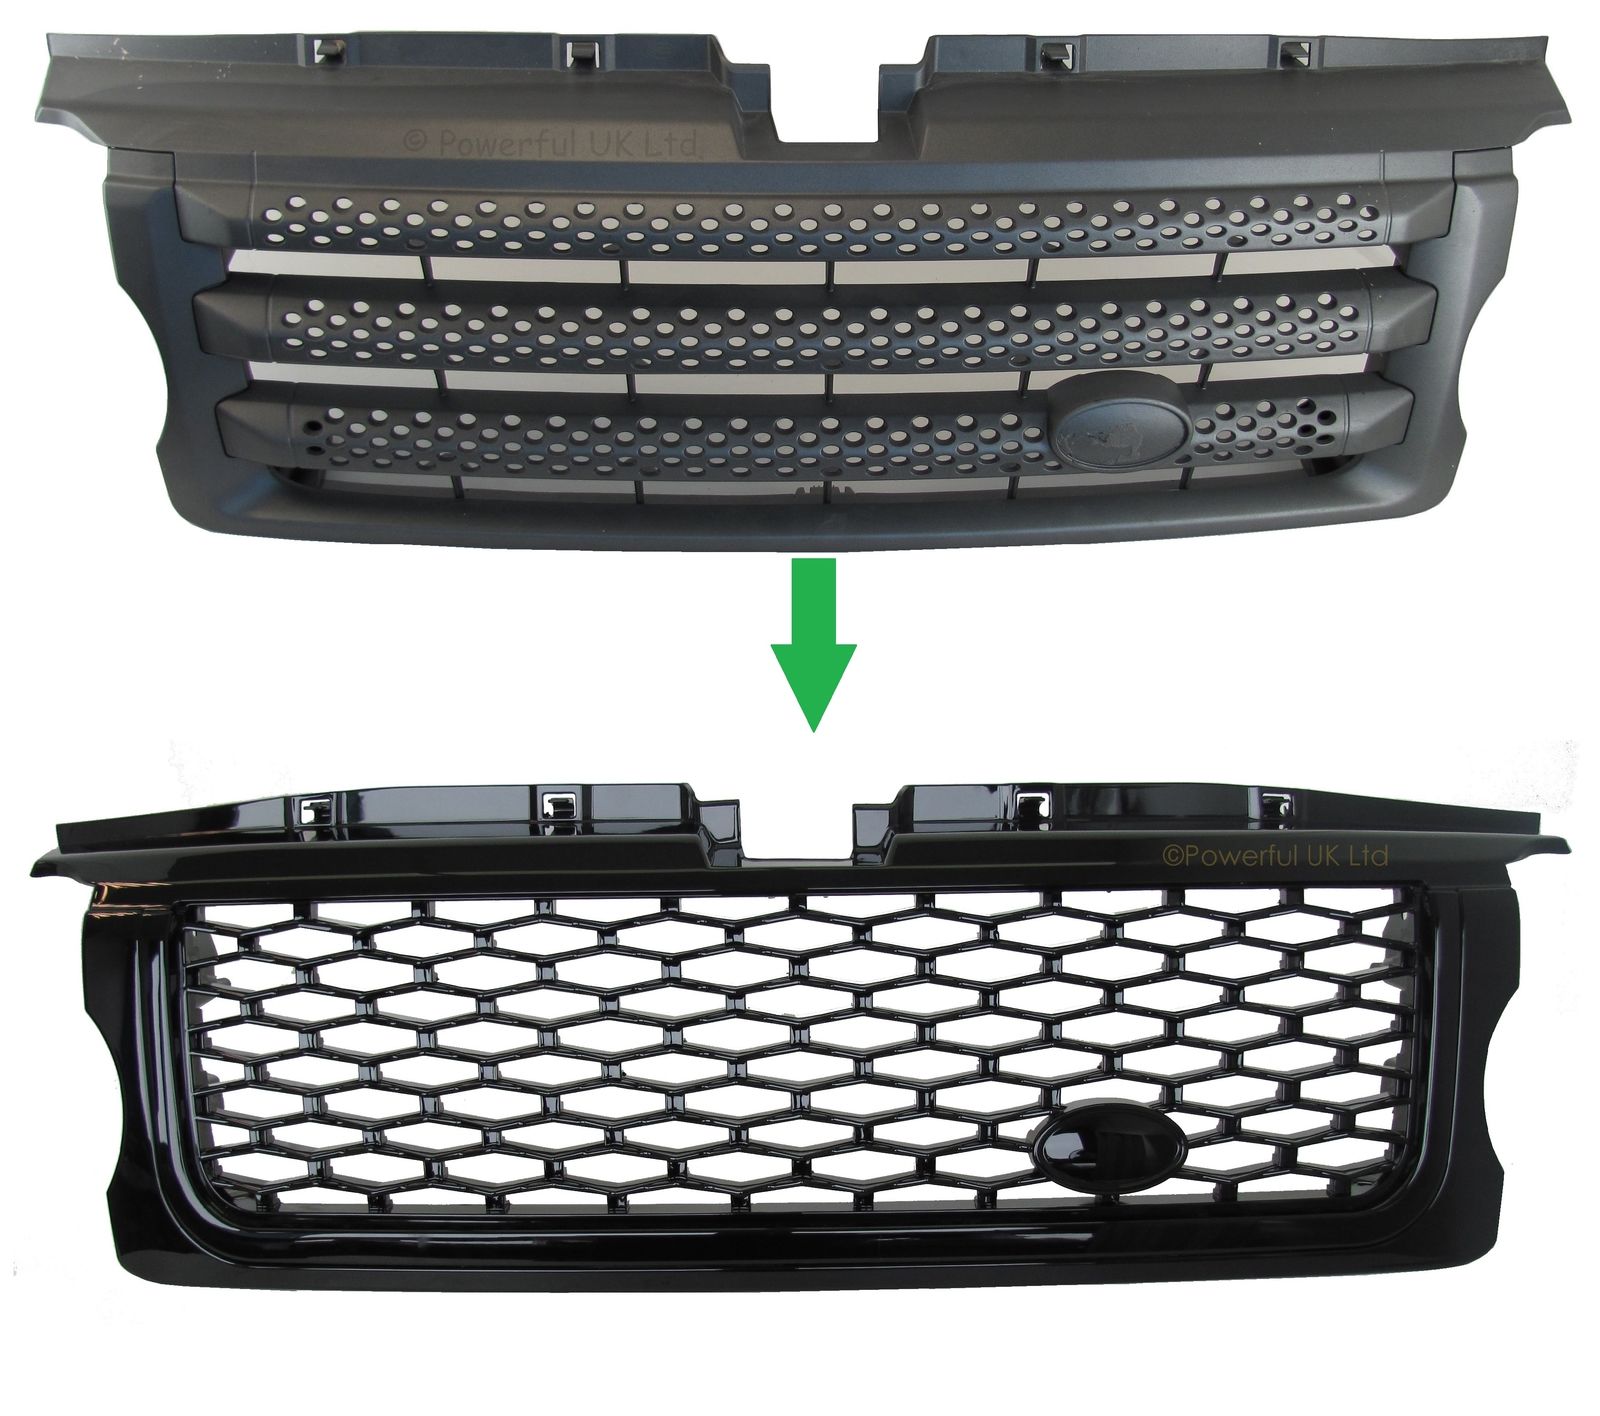 Range Rover sport Grille+side vent Autobiography style upgrade kit black+chrome